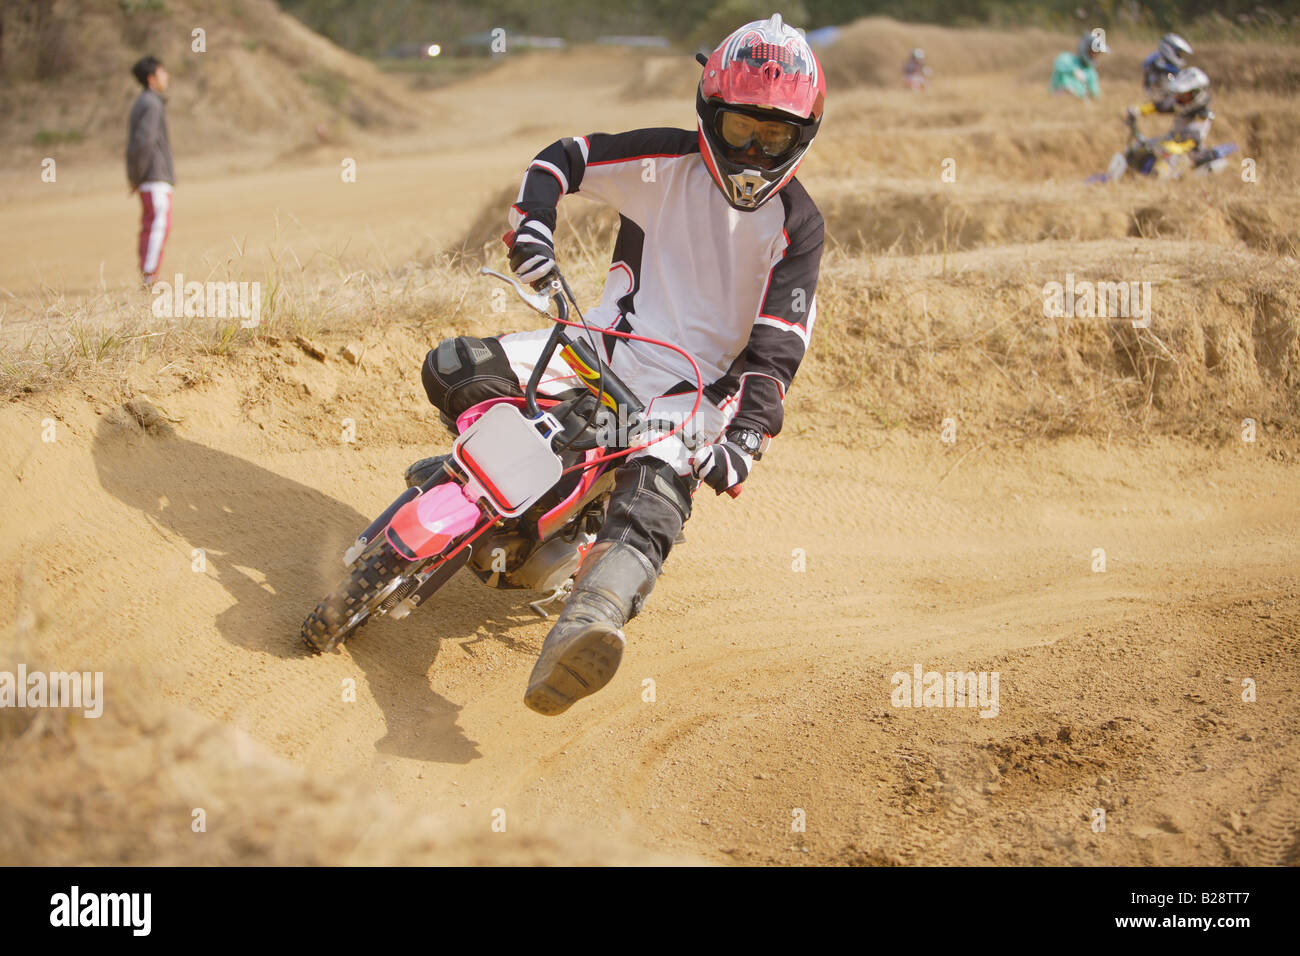 Rider Motocross tournant Banque D'Images